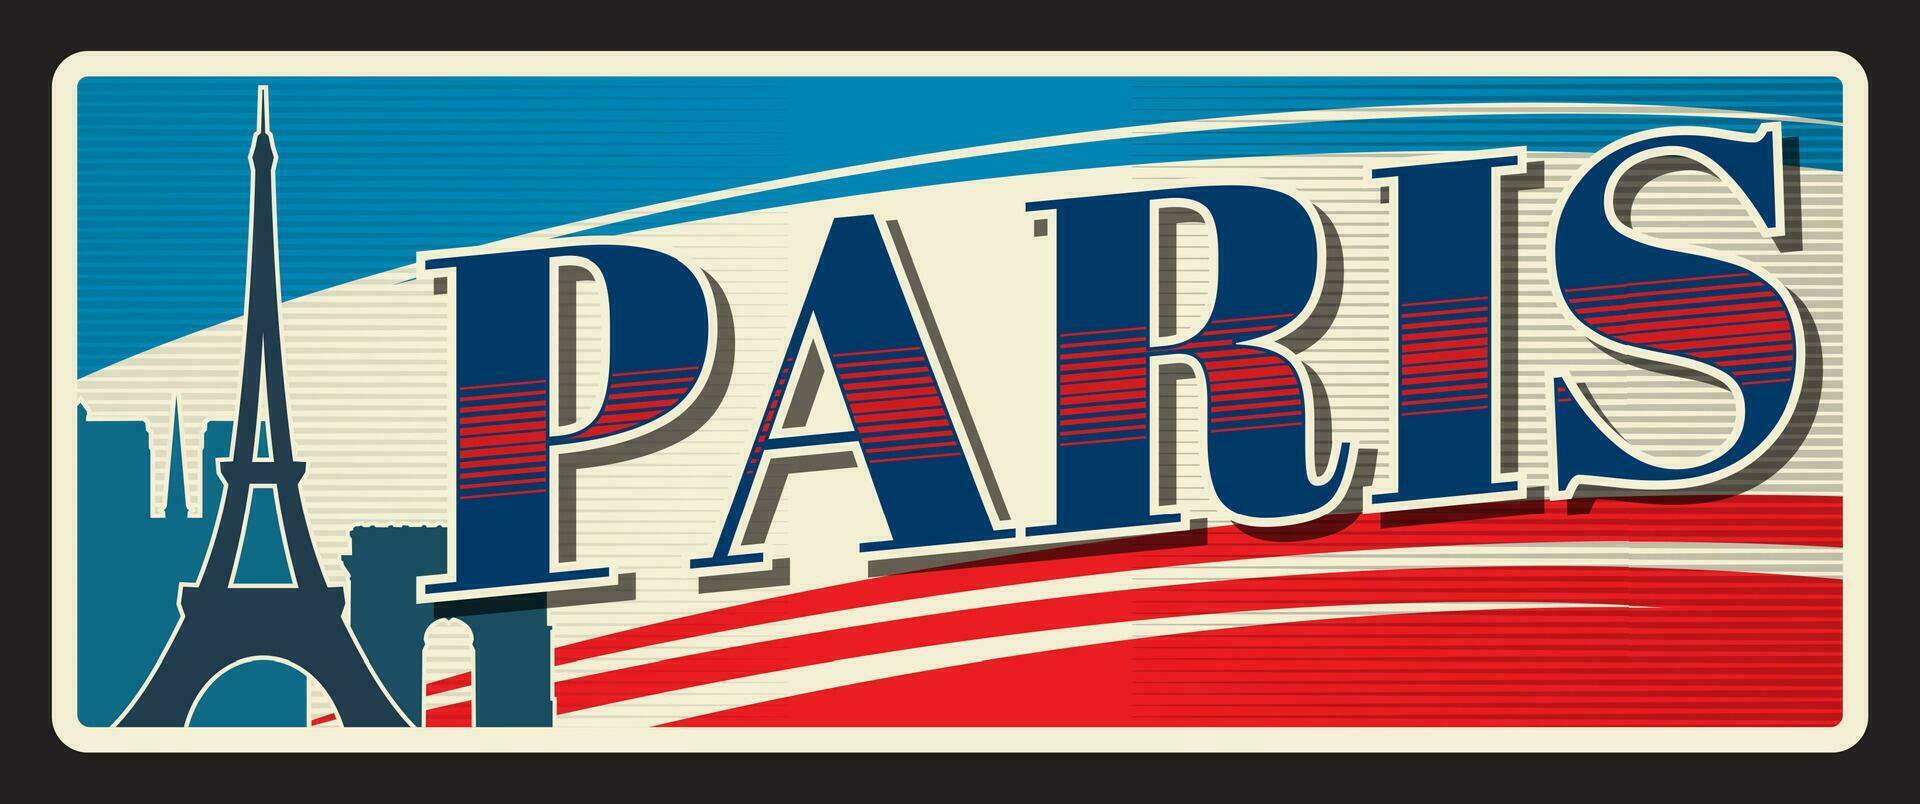 Parijs reizen sticker of bord, Frankrijk bagage label vector